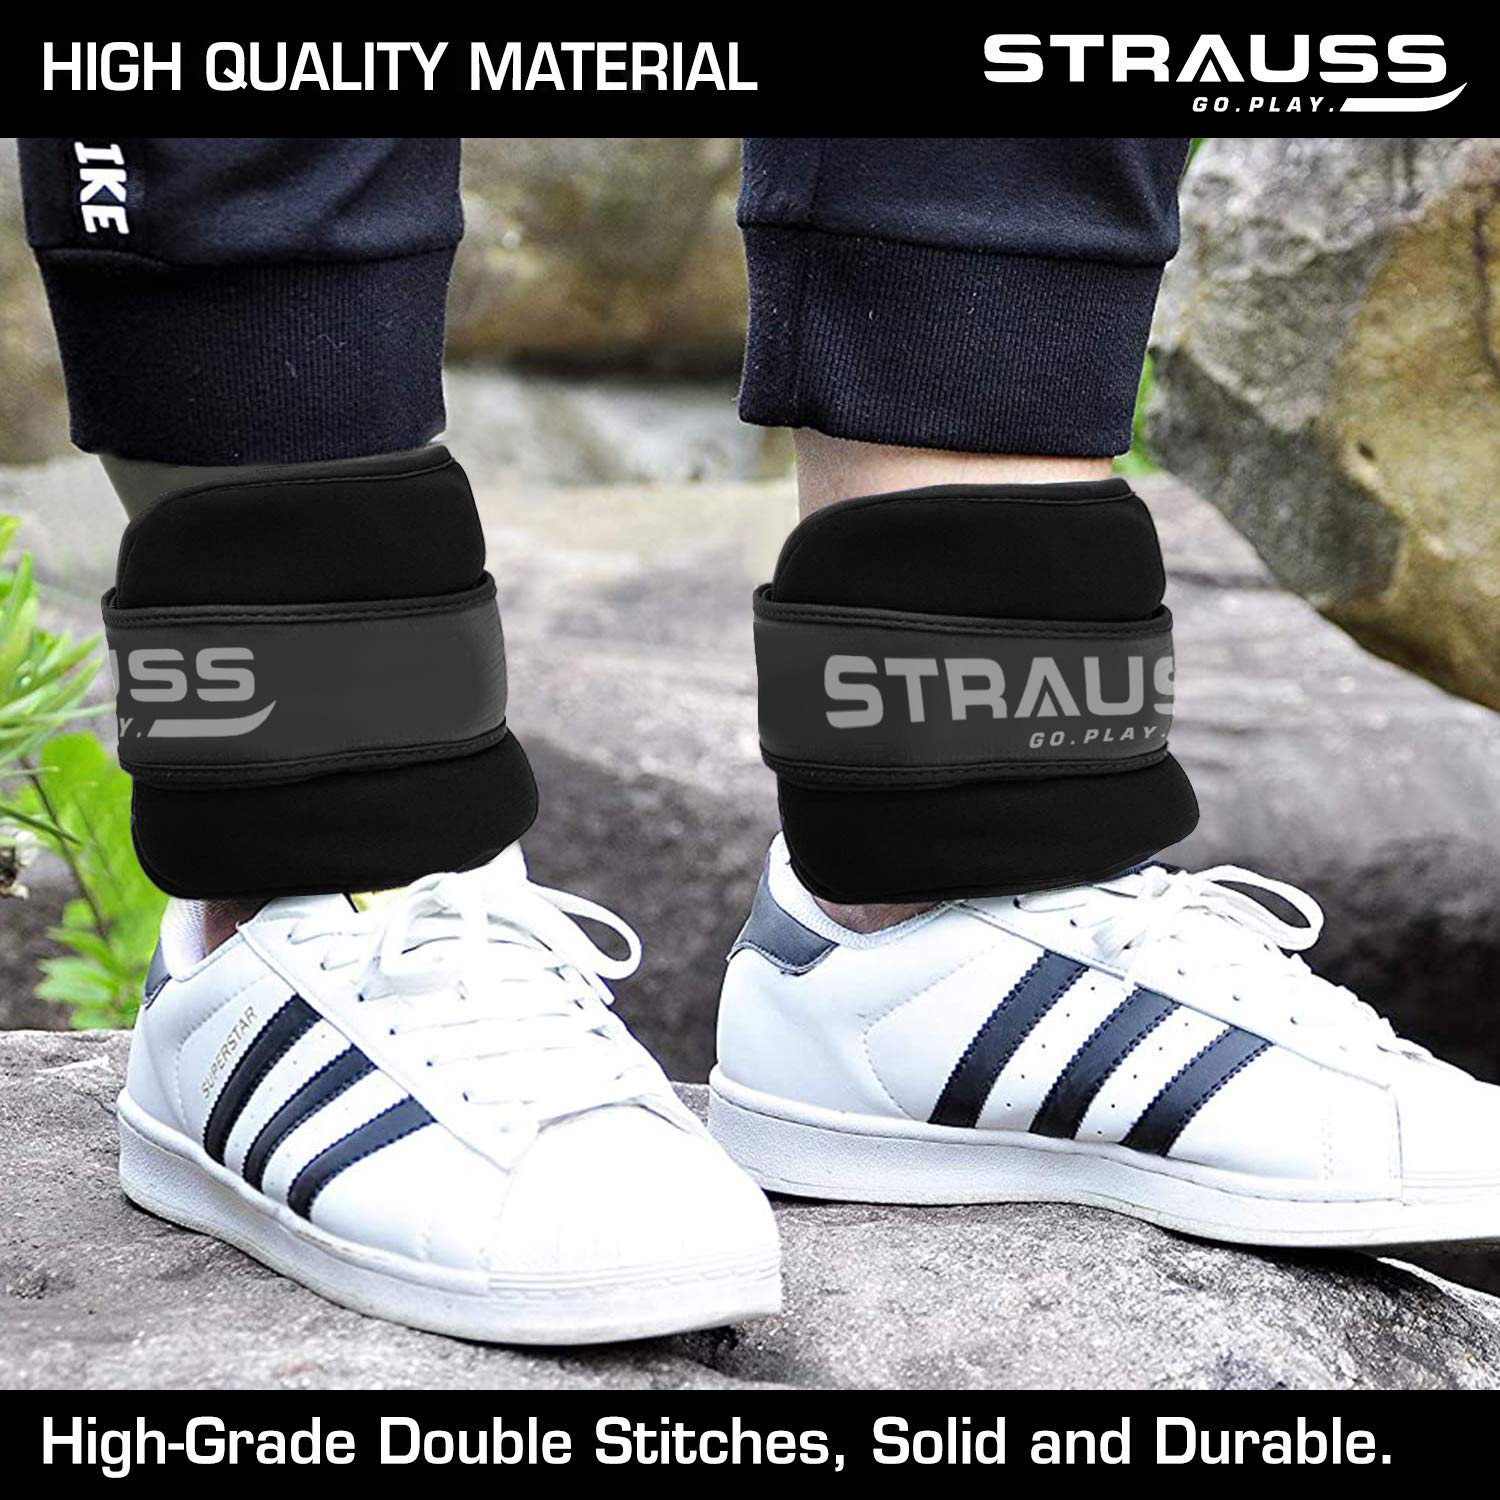 Strauss Round Shape Ankle Weight, 2 Kg (Each), Pair, (Black)